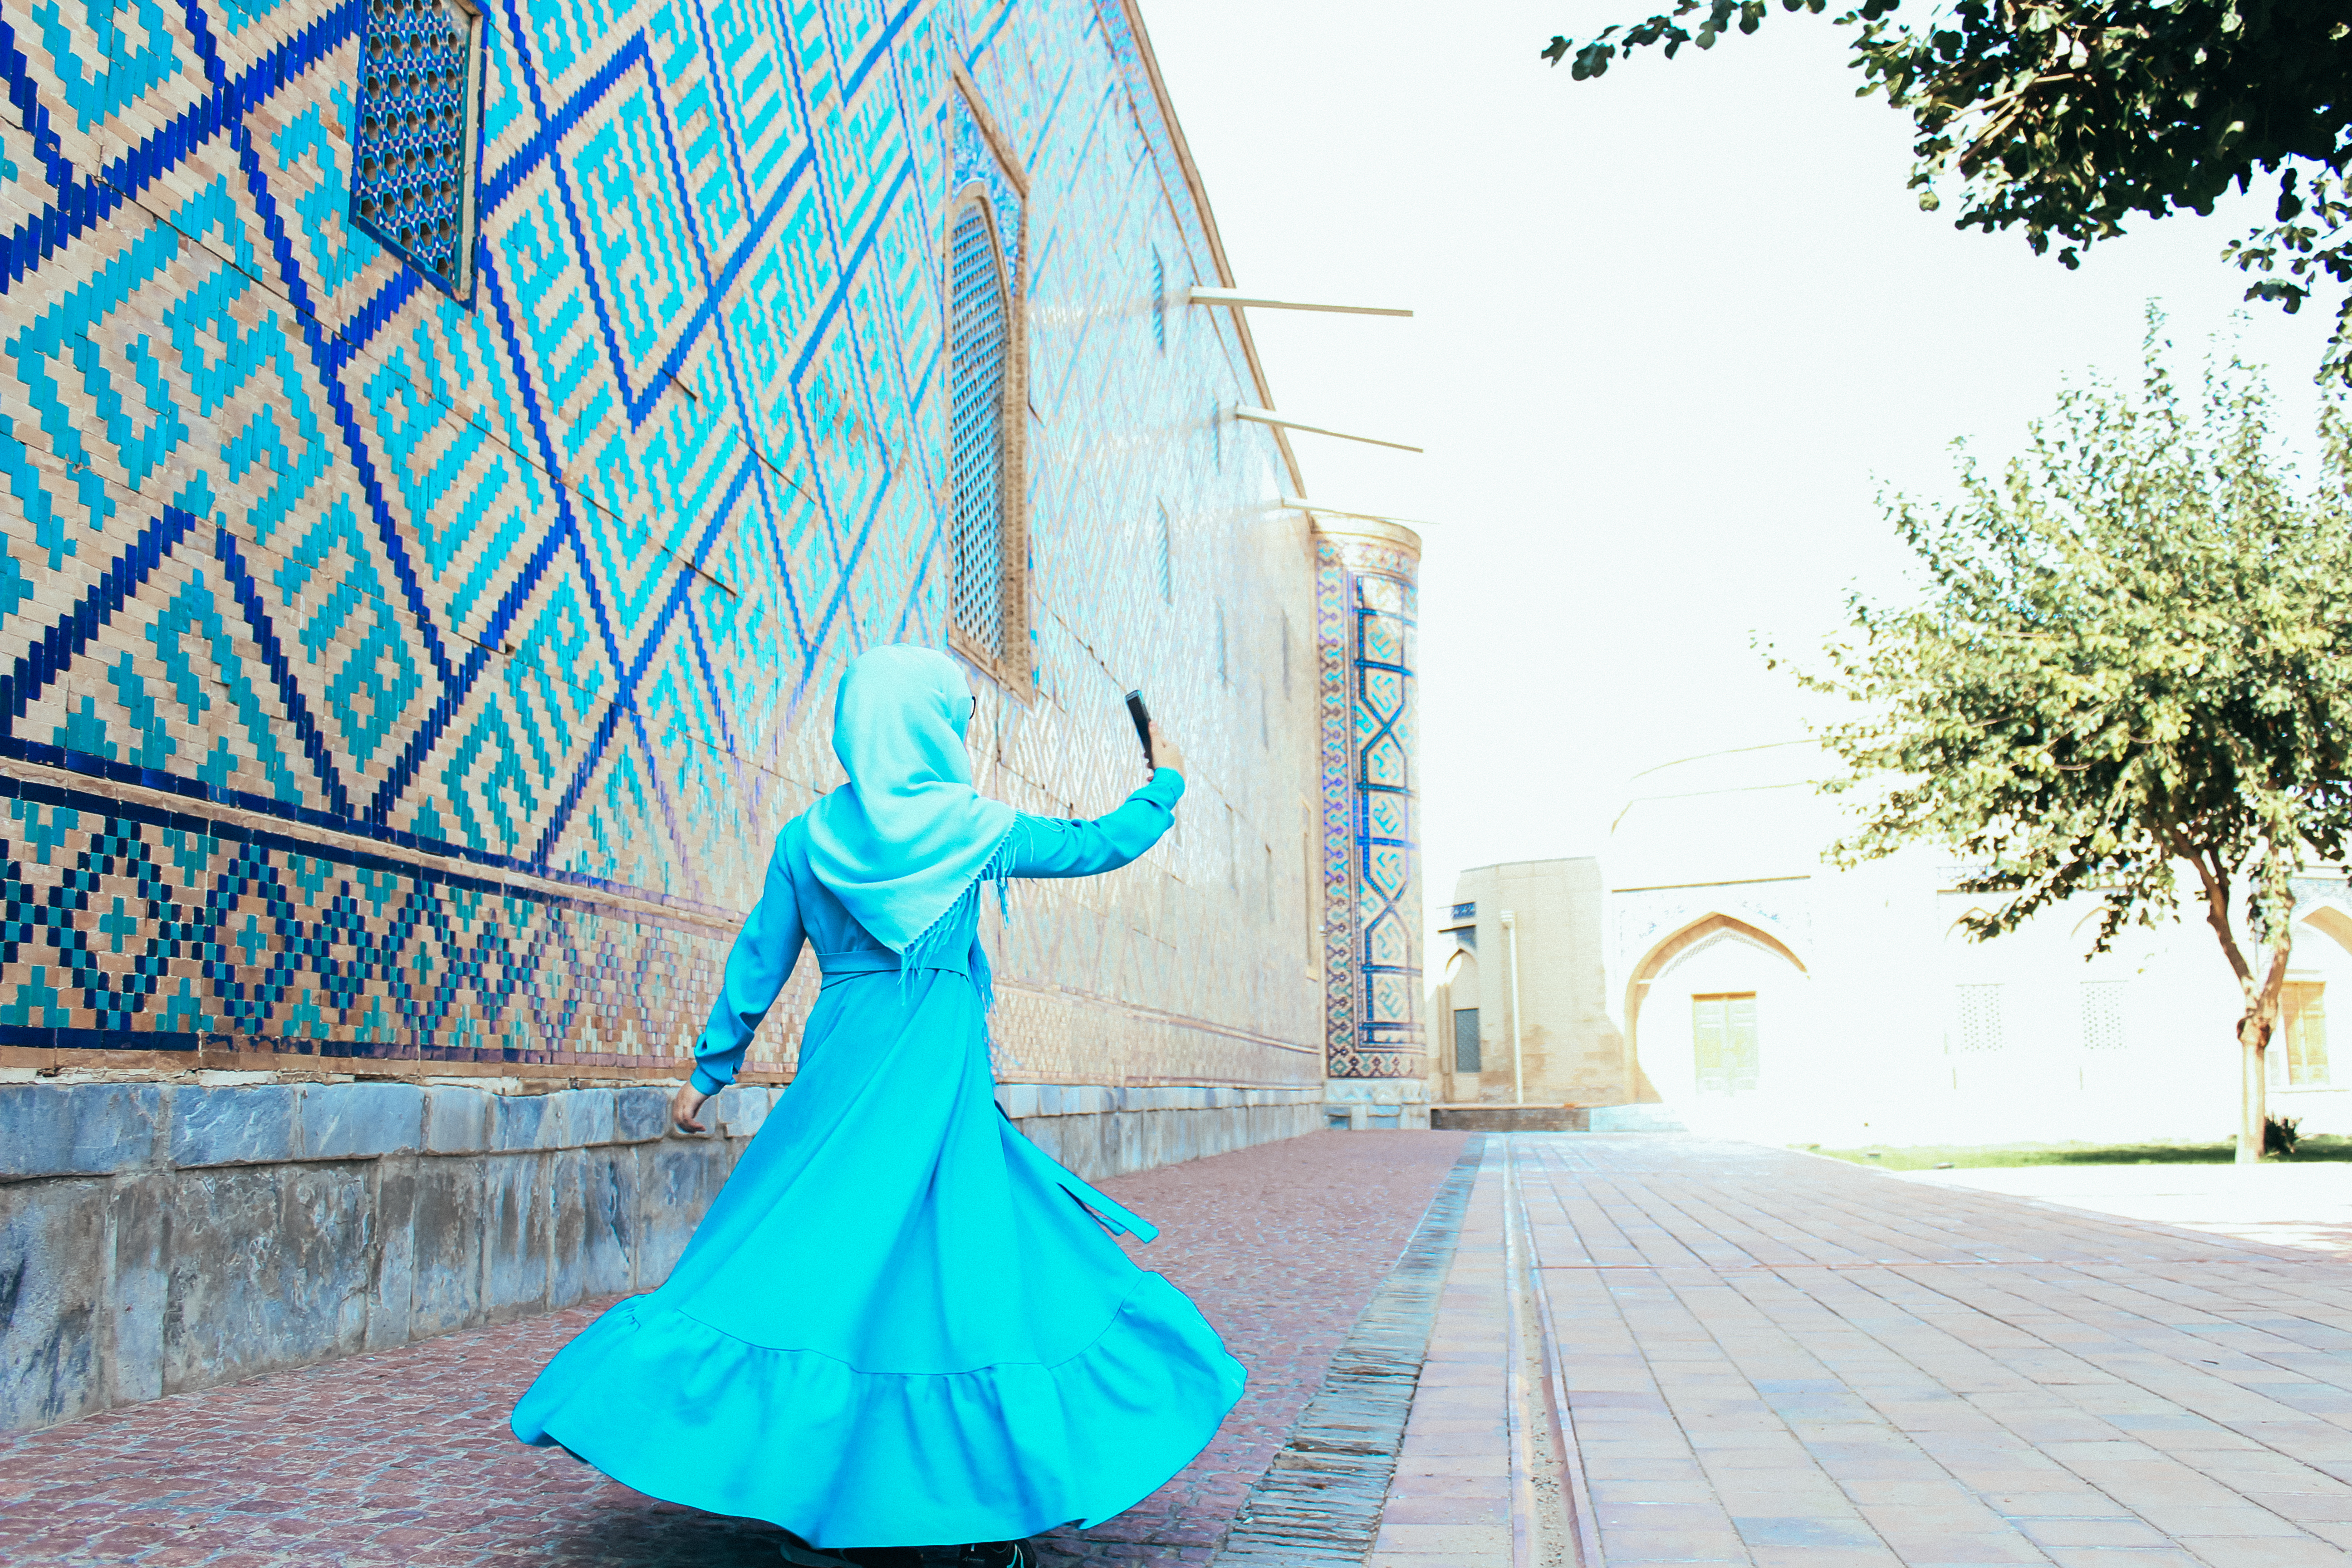 Muslim woman in a blue dress in Samarkand takes a selfie